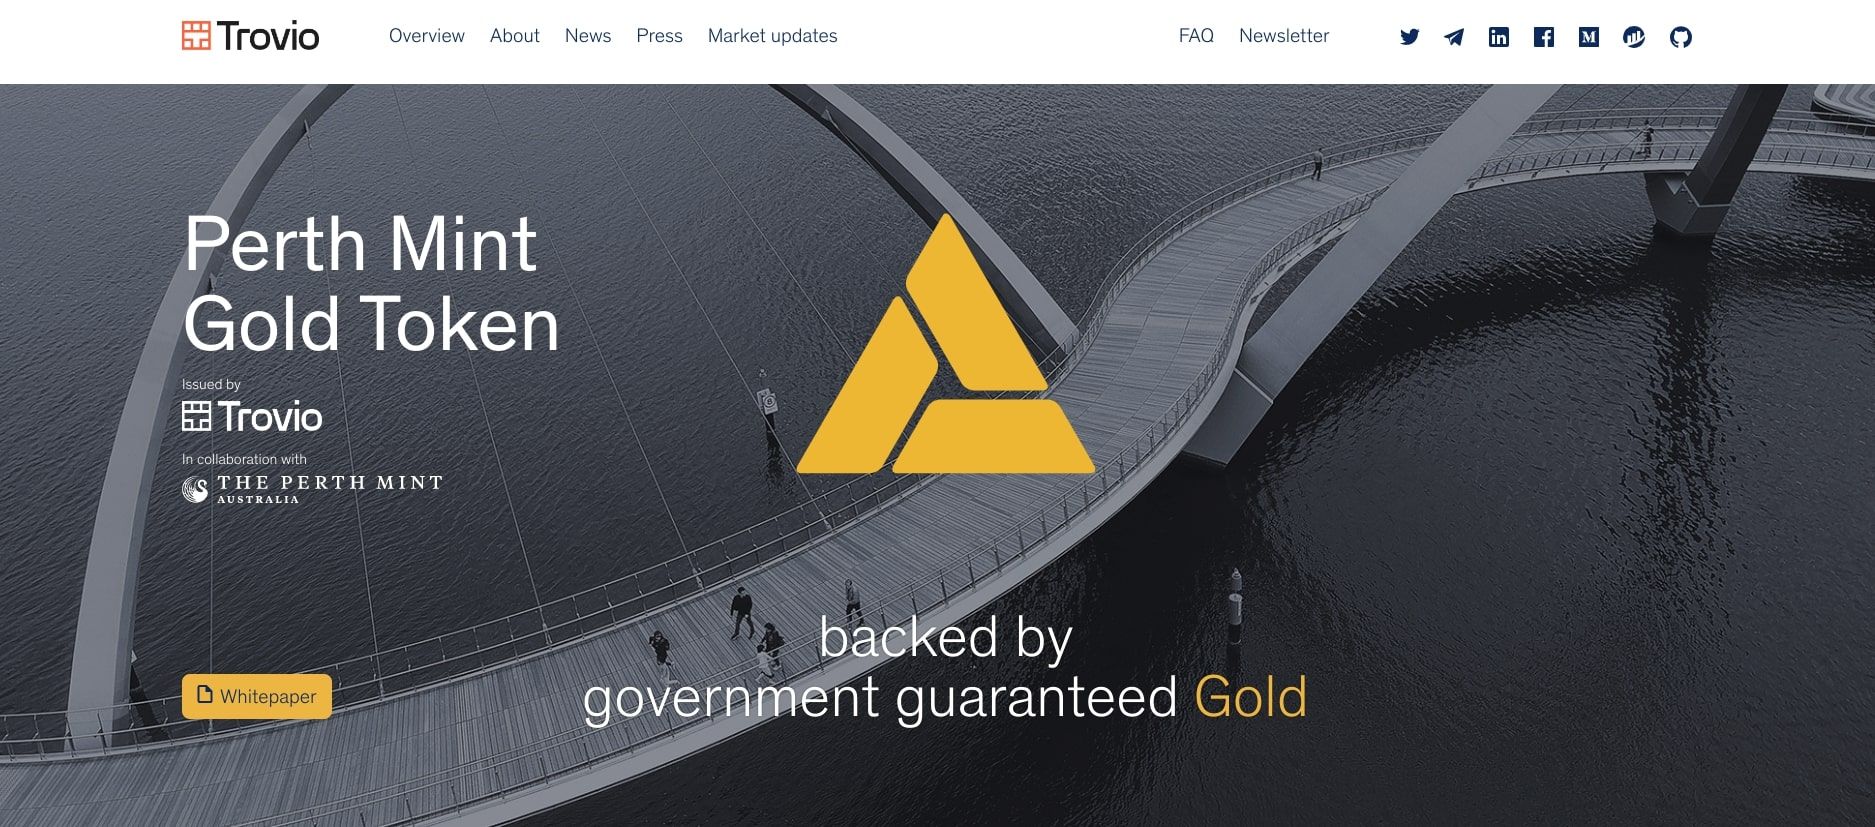 trovio perth mint gold token homepage screenshot 